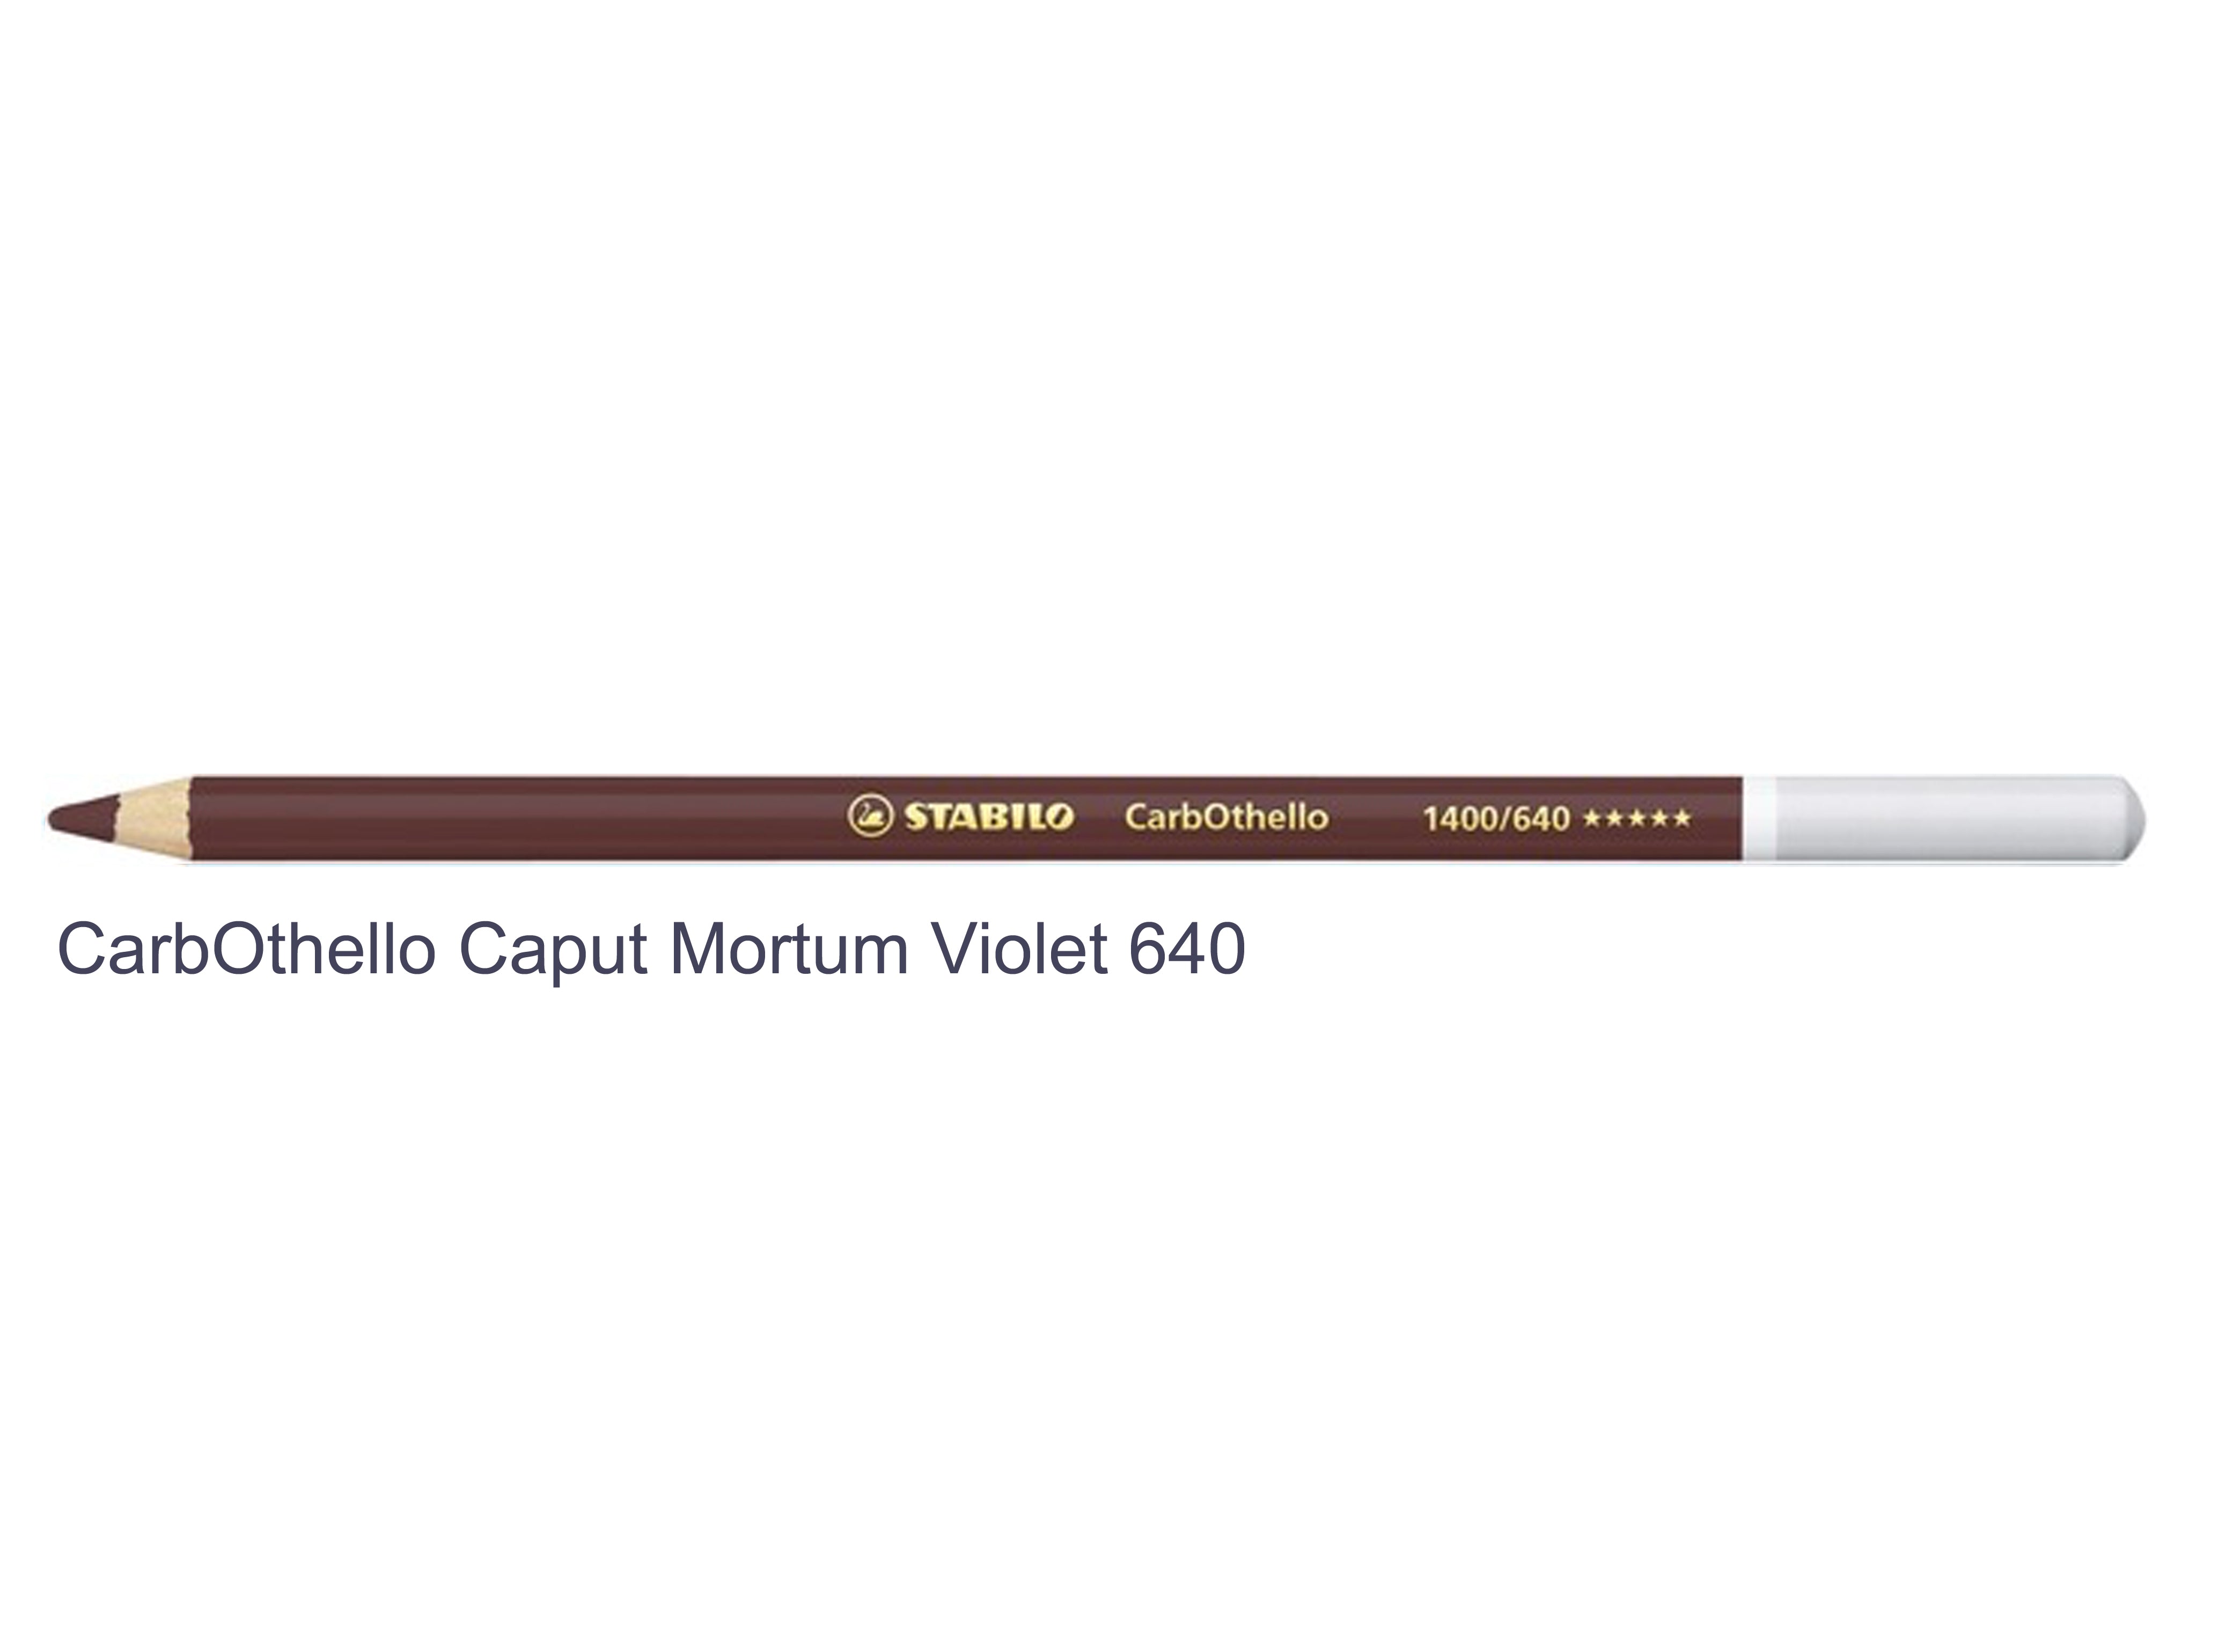 Caput mortum violet 640 STABILO CarbOthello chalk-pastel pencils